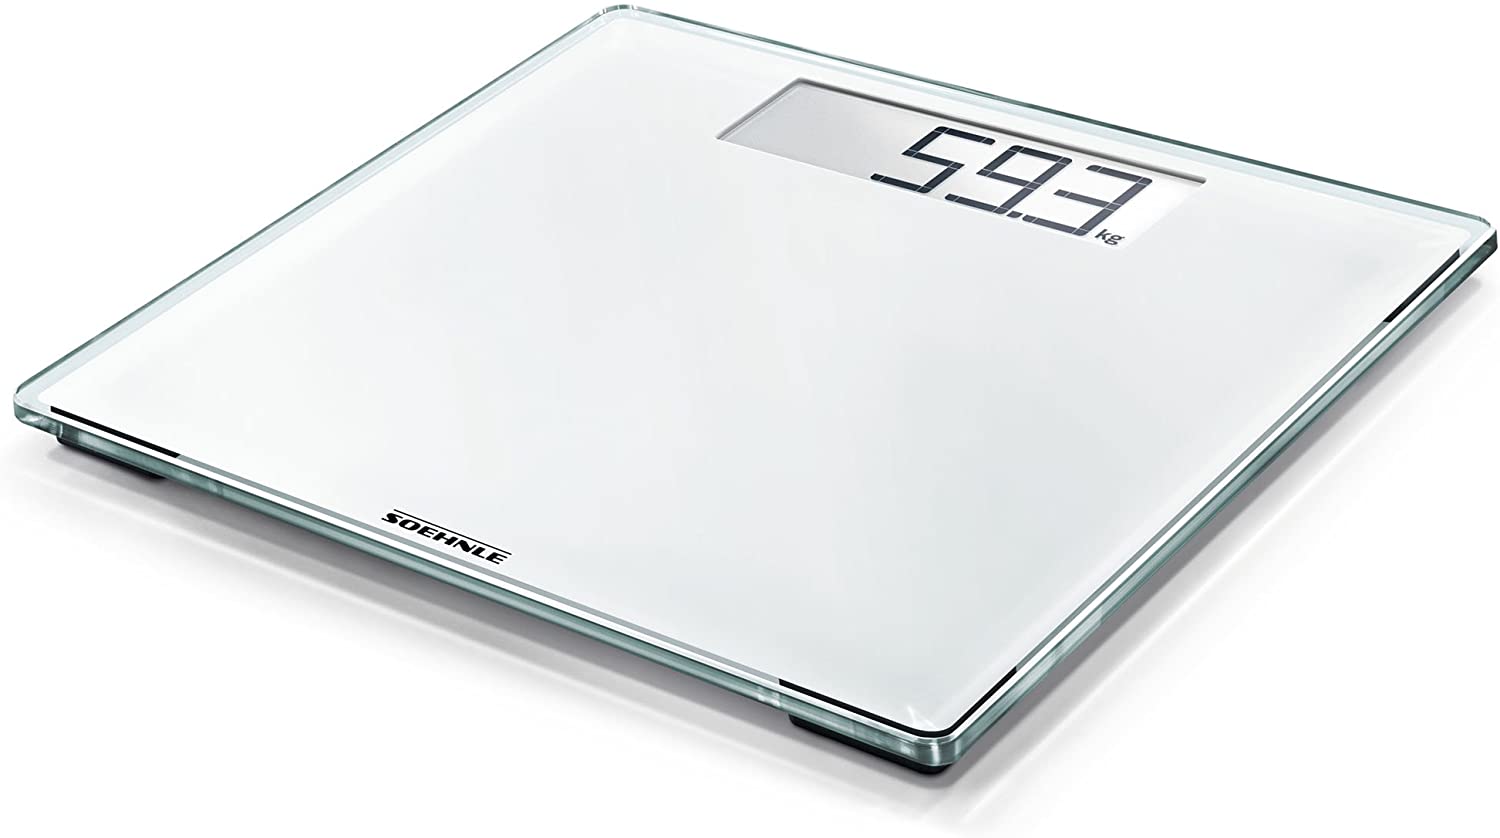 Soehnle 63853 Style Sense Comfort Digital Bathroom Scale | White color